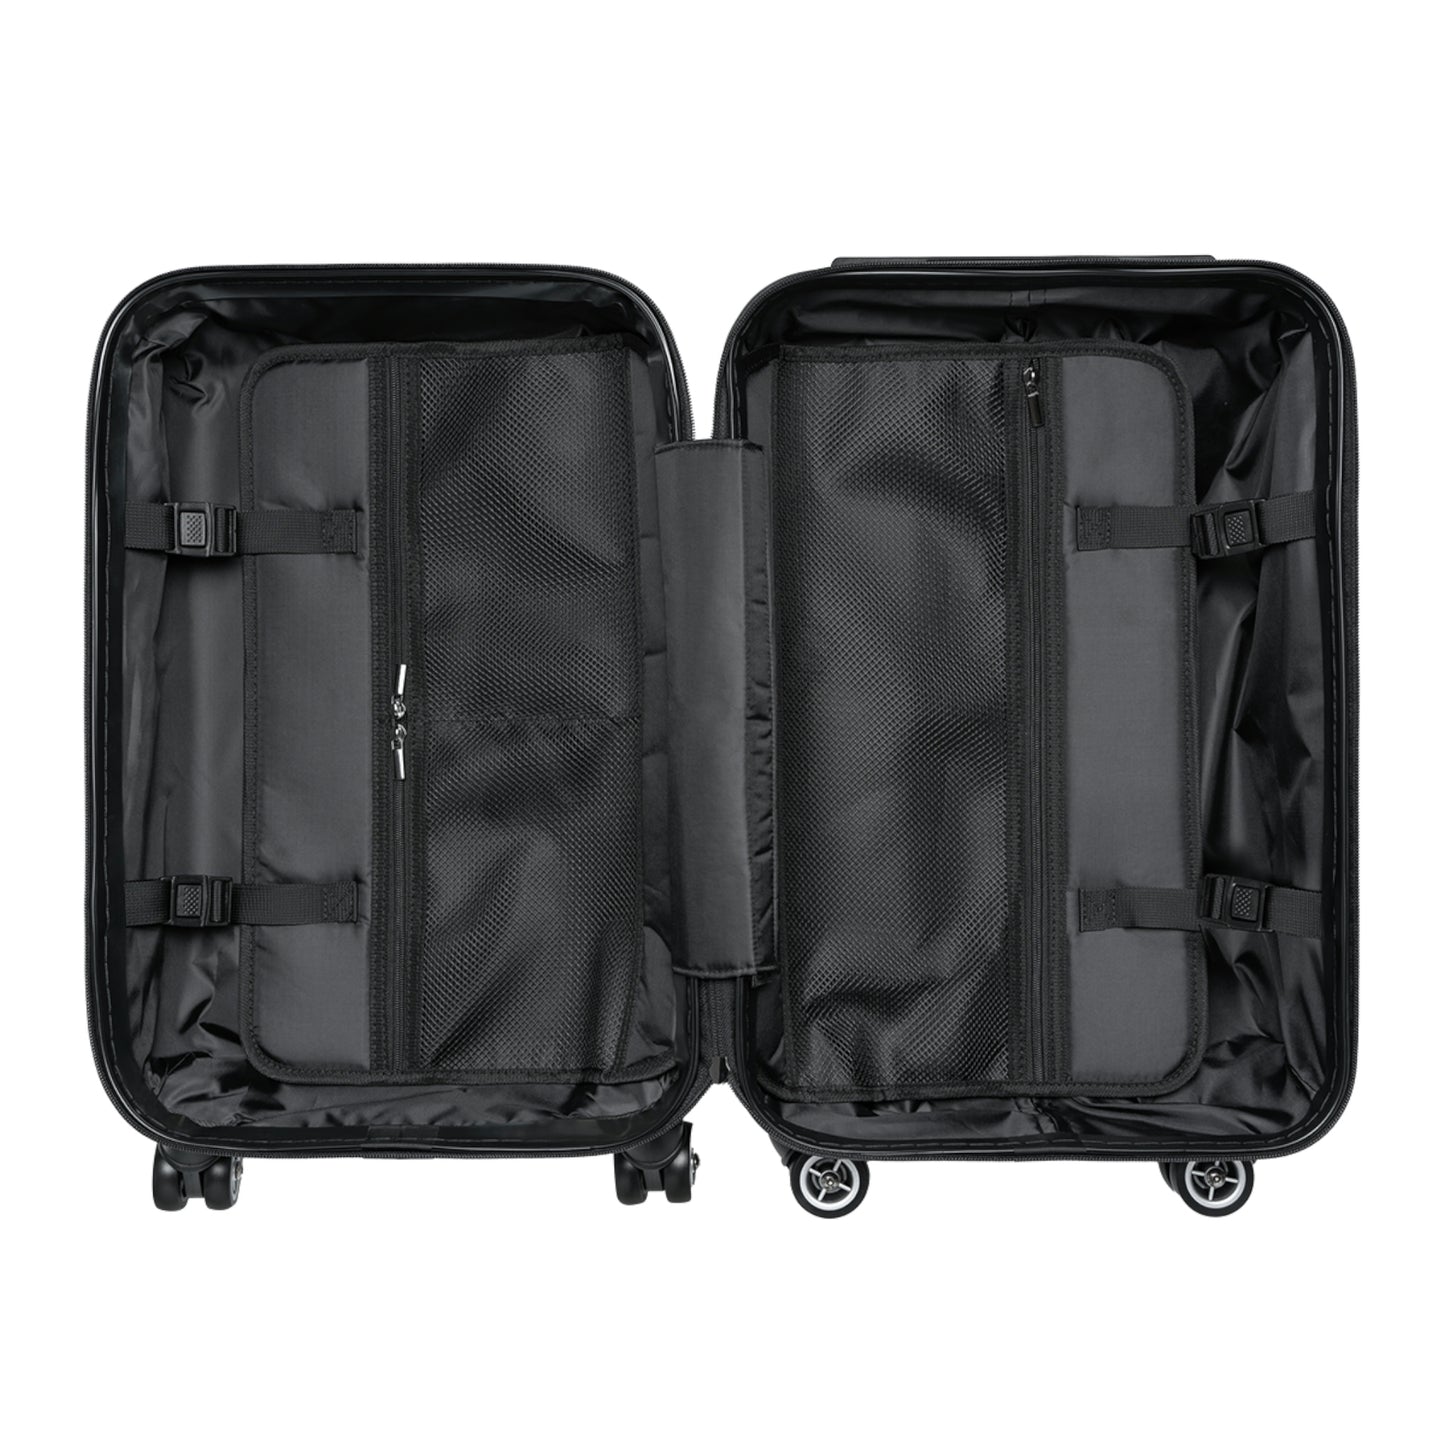 Shockwave EL423 Cabin Suitcases